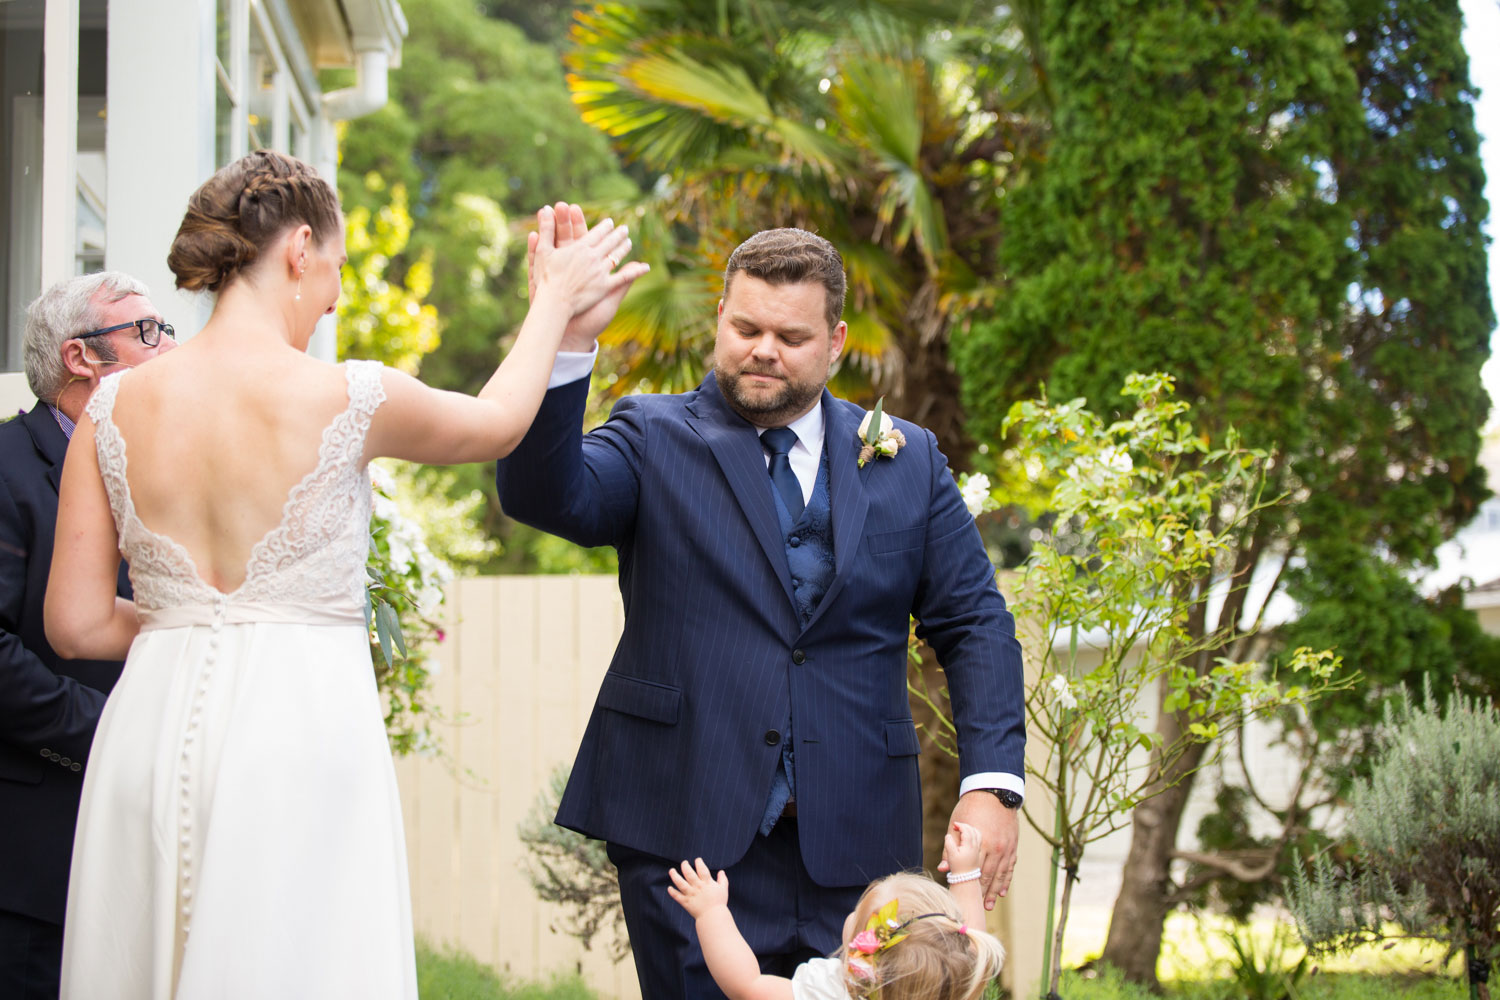 wedding photographer auckland groom and bride high five